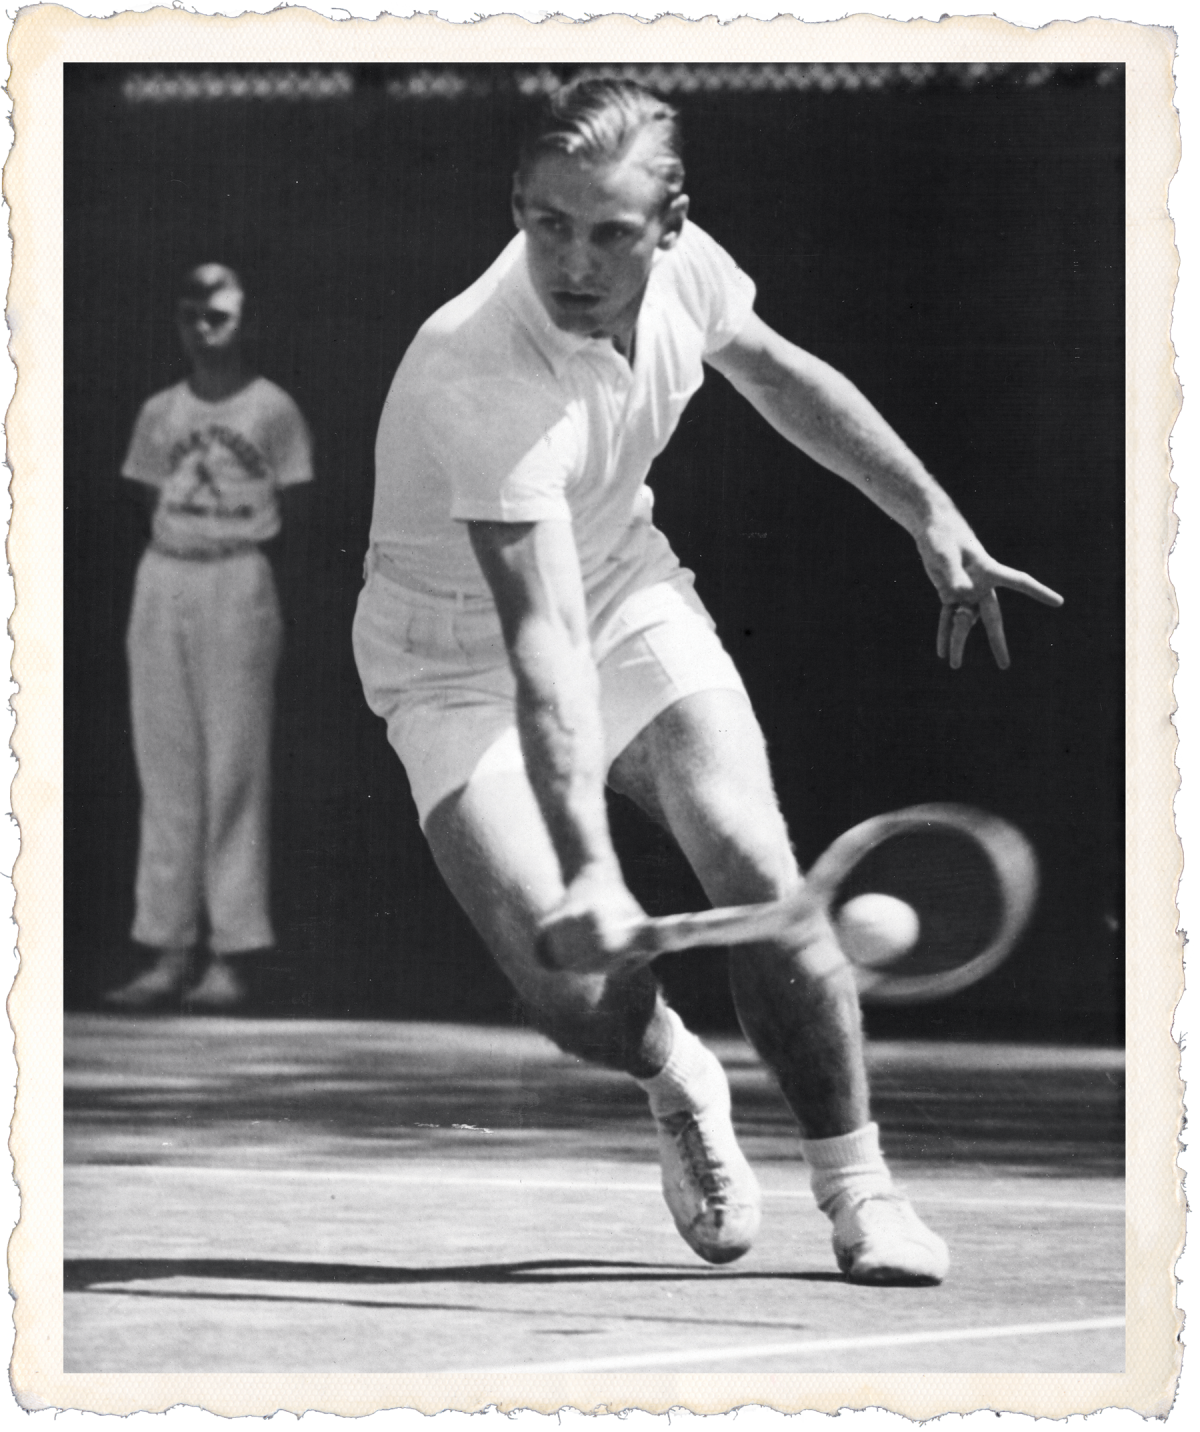 Joe Hunt playing tennis